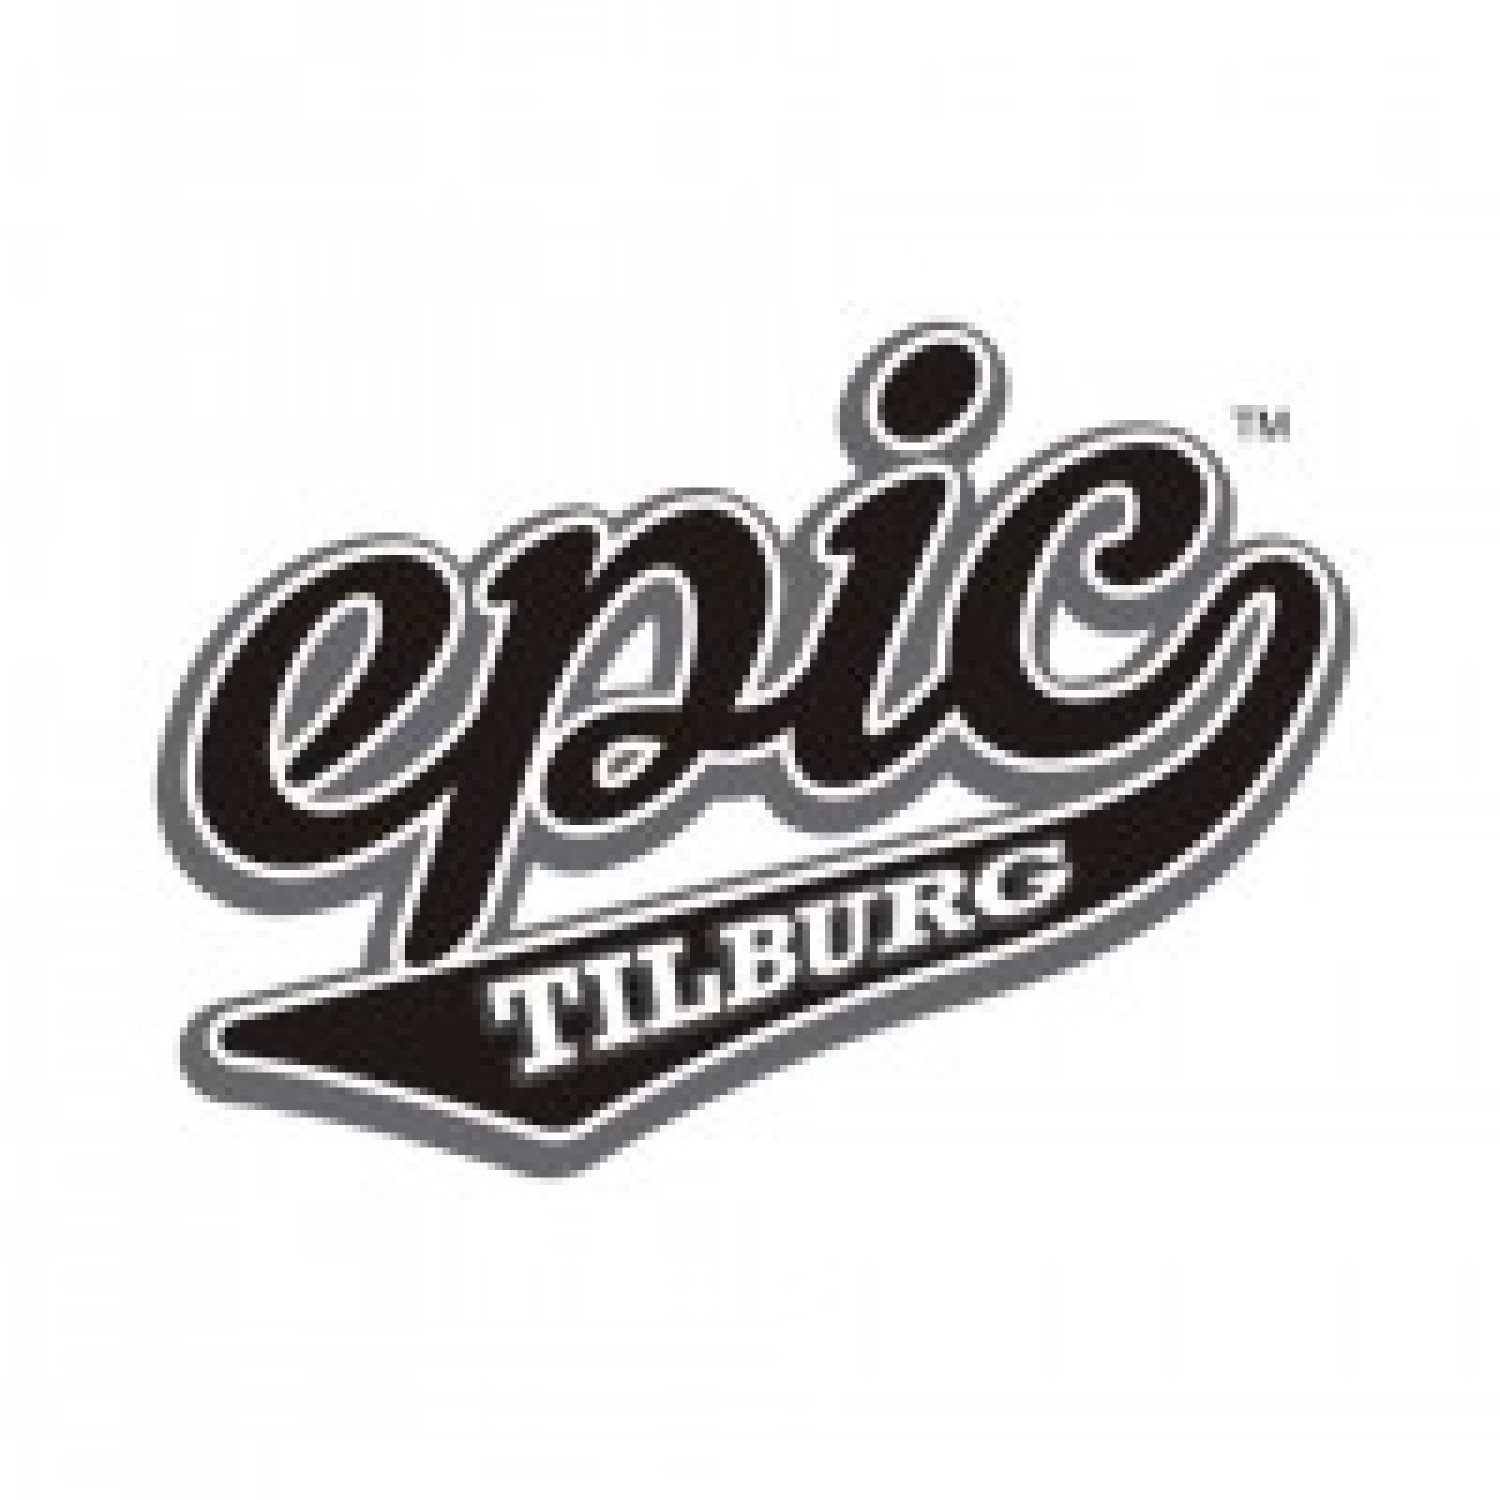 Epic Tilburg